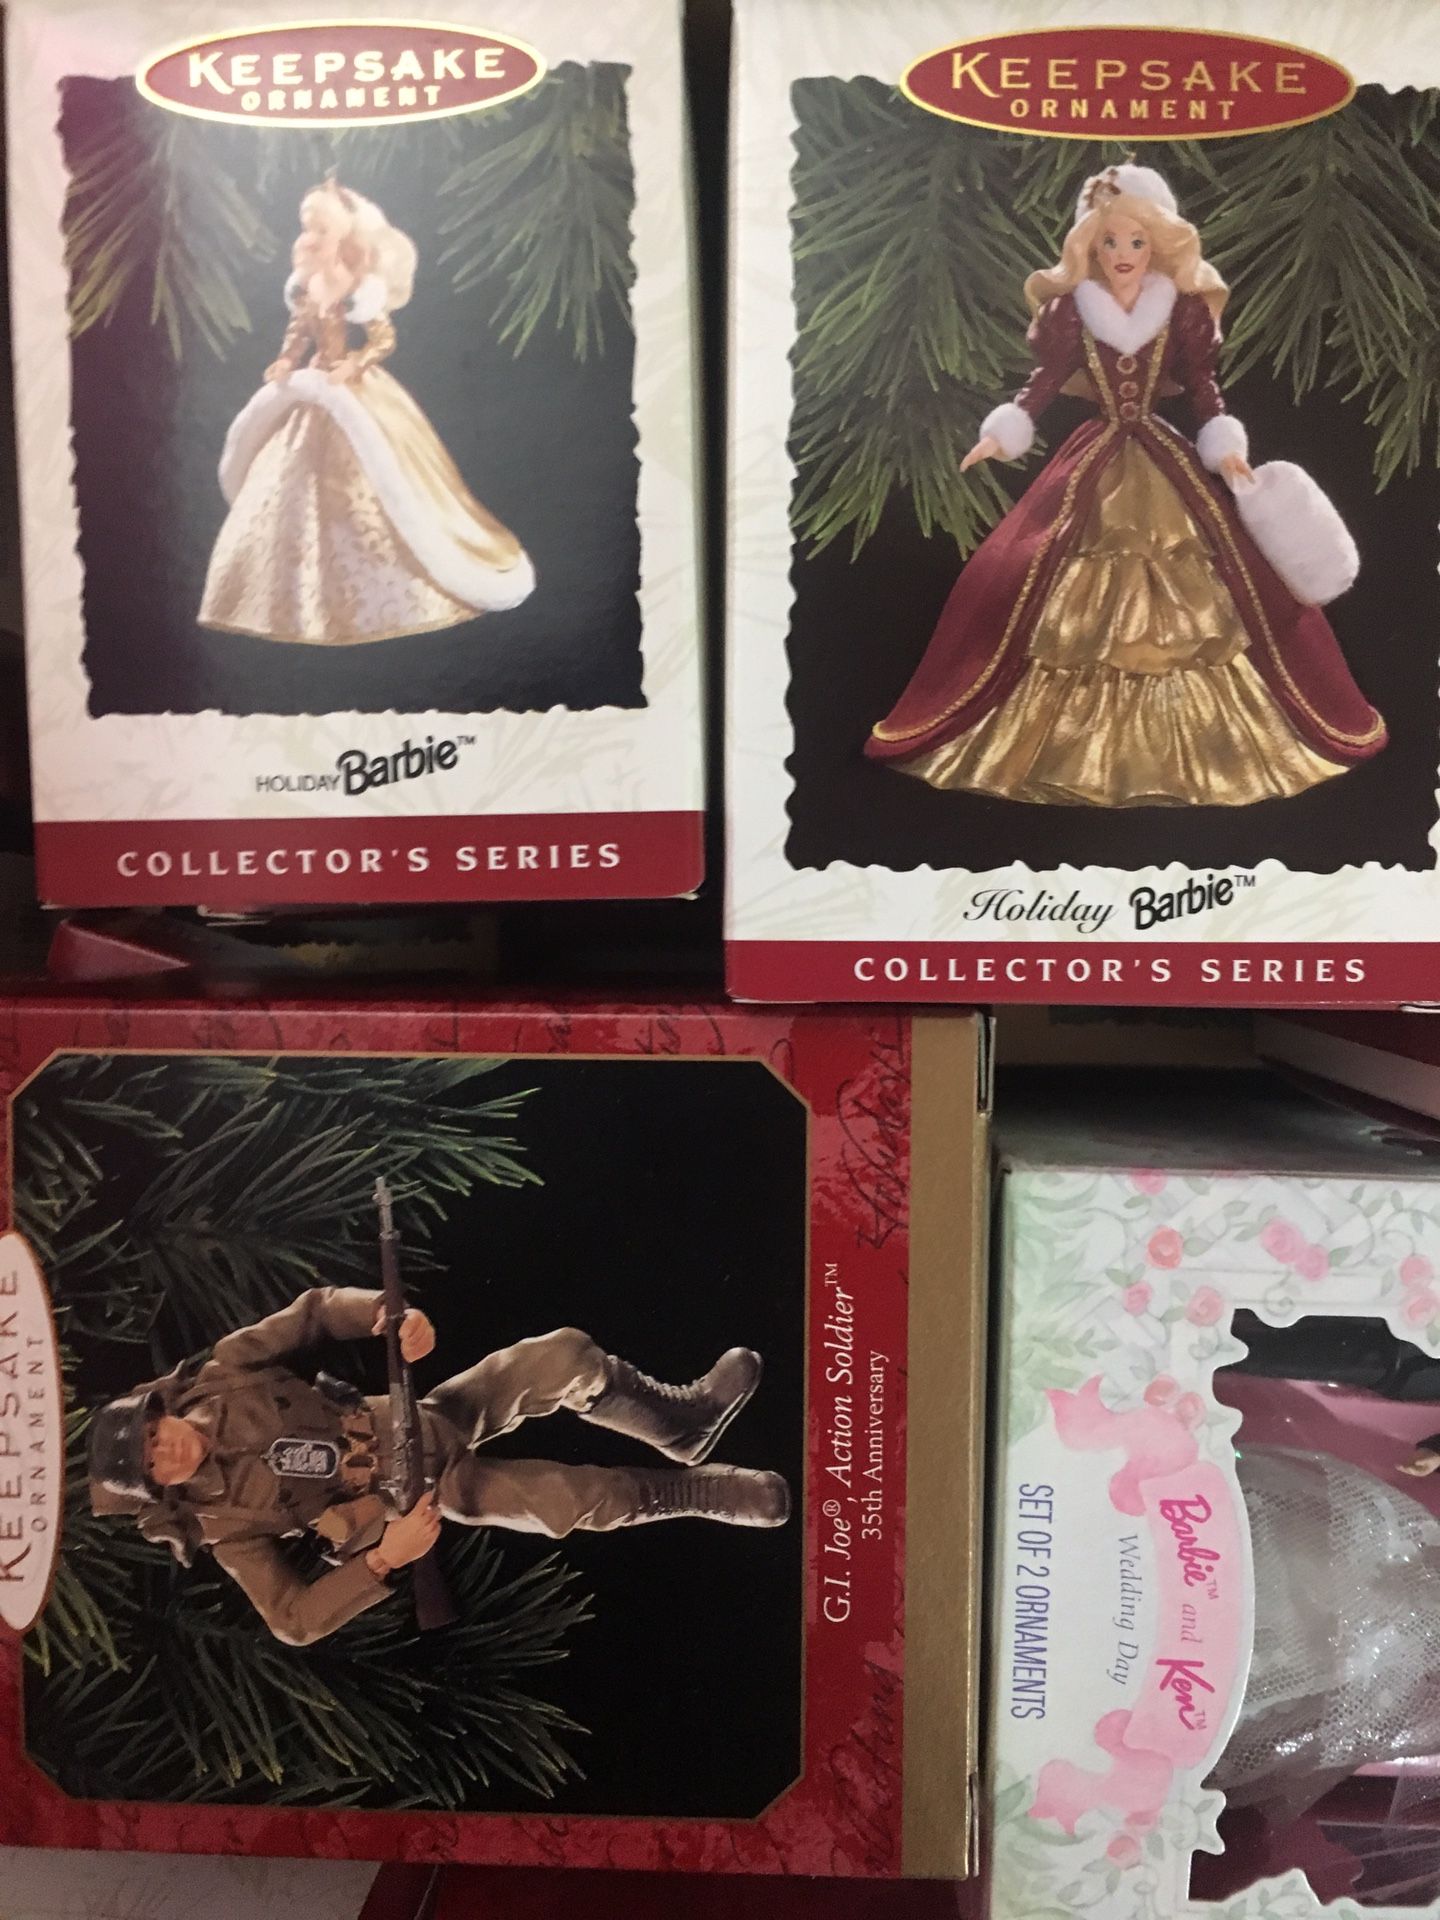 Hallmark Holiday Collectible Ornaments 1990s - Barbie, Star Trek, NASA, G.I. Joe